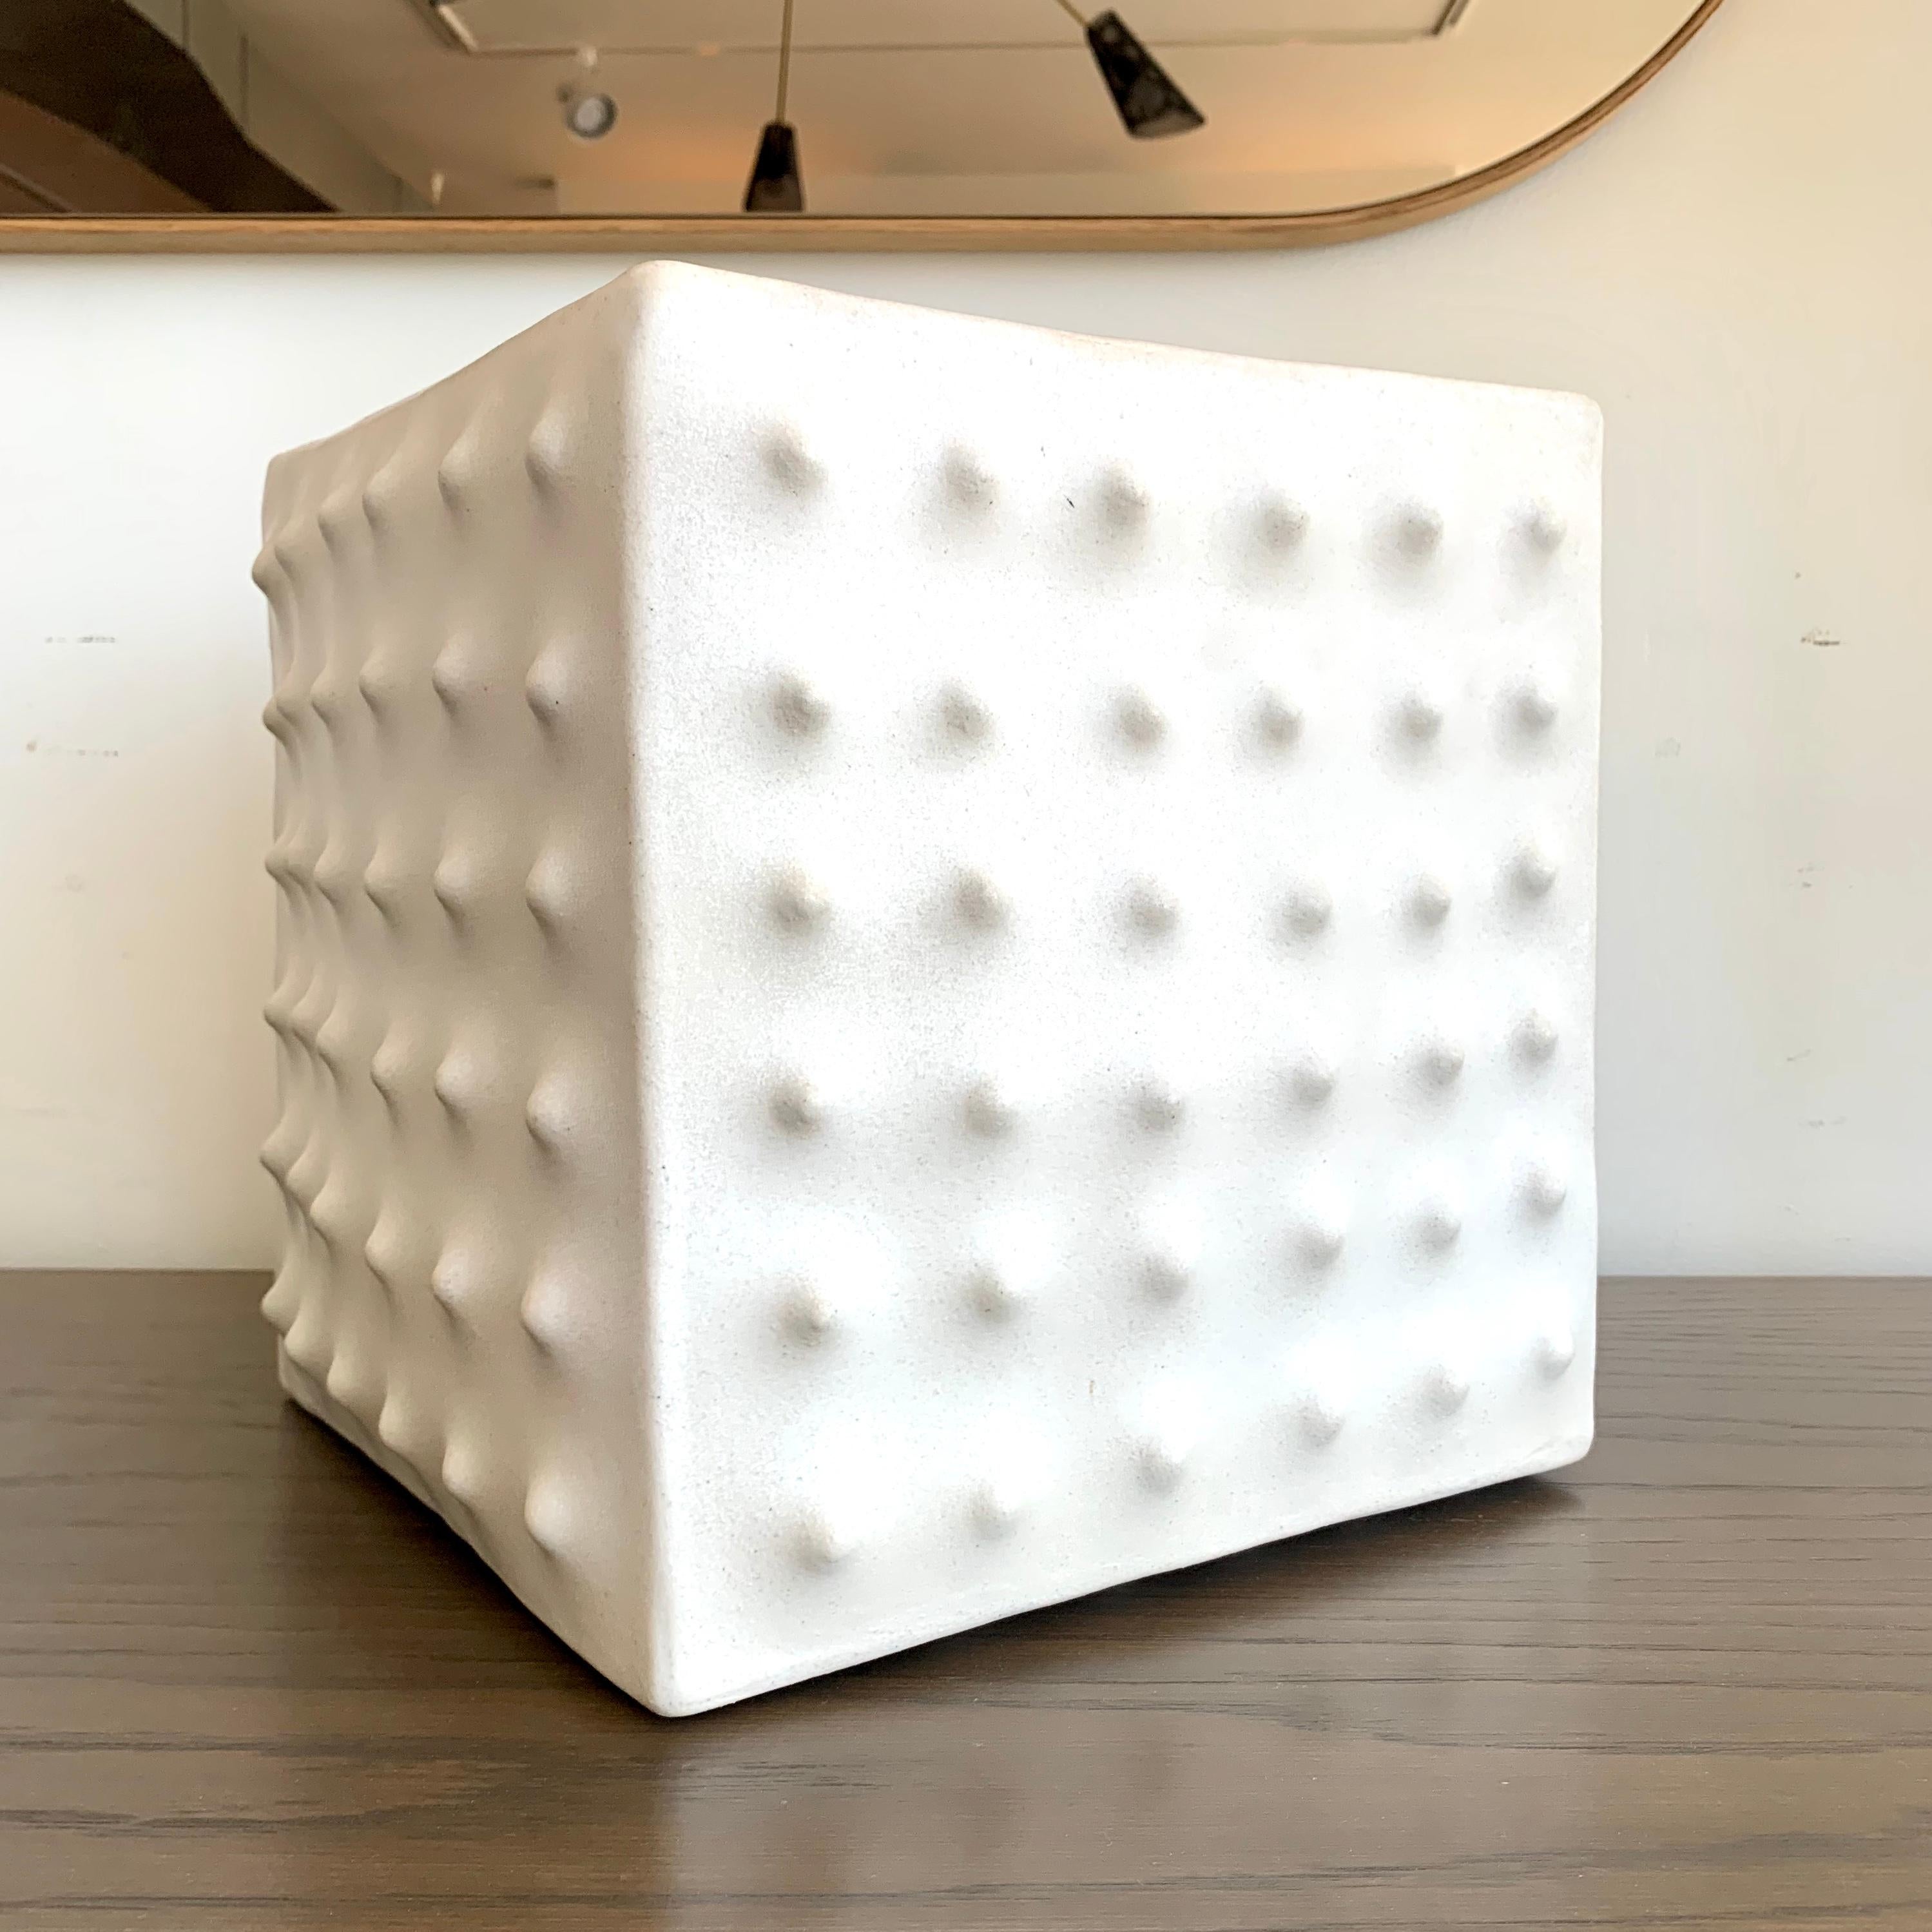 American White Ceramic Cube Sculpture by Luke Shalan